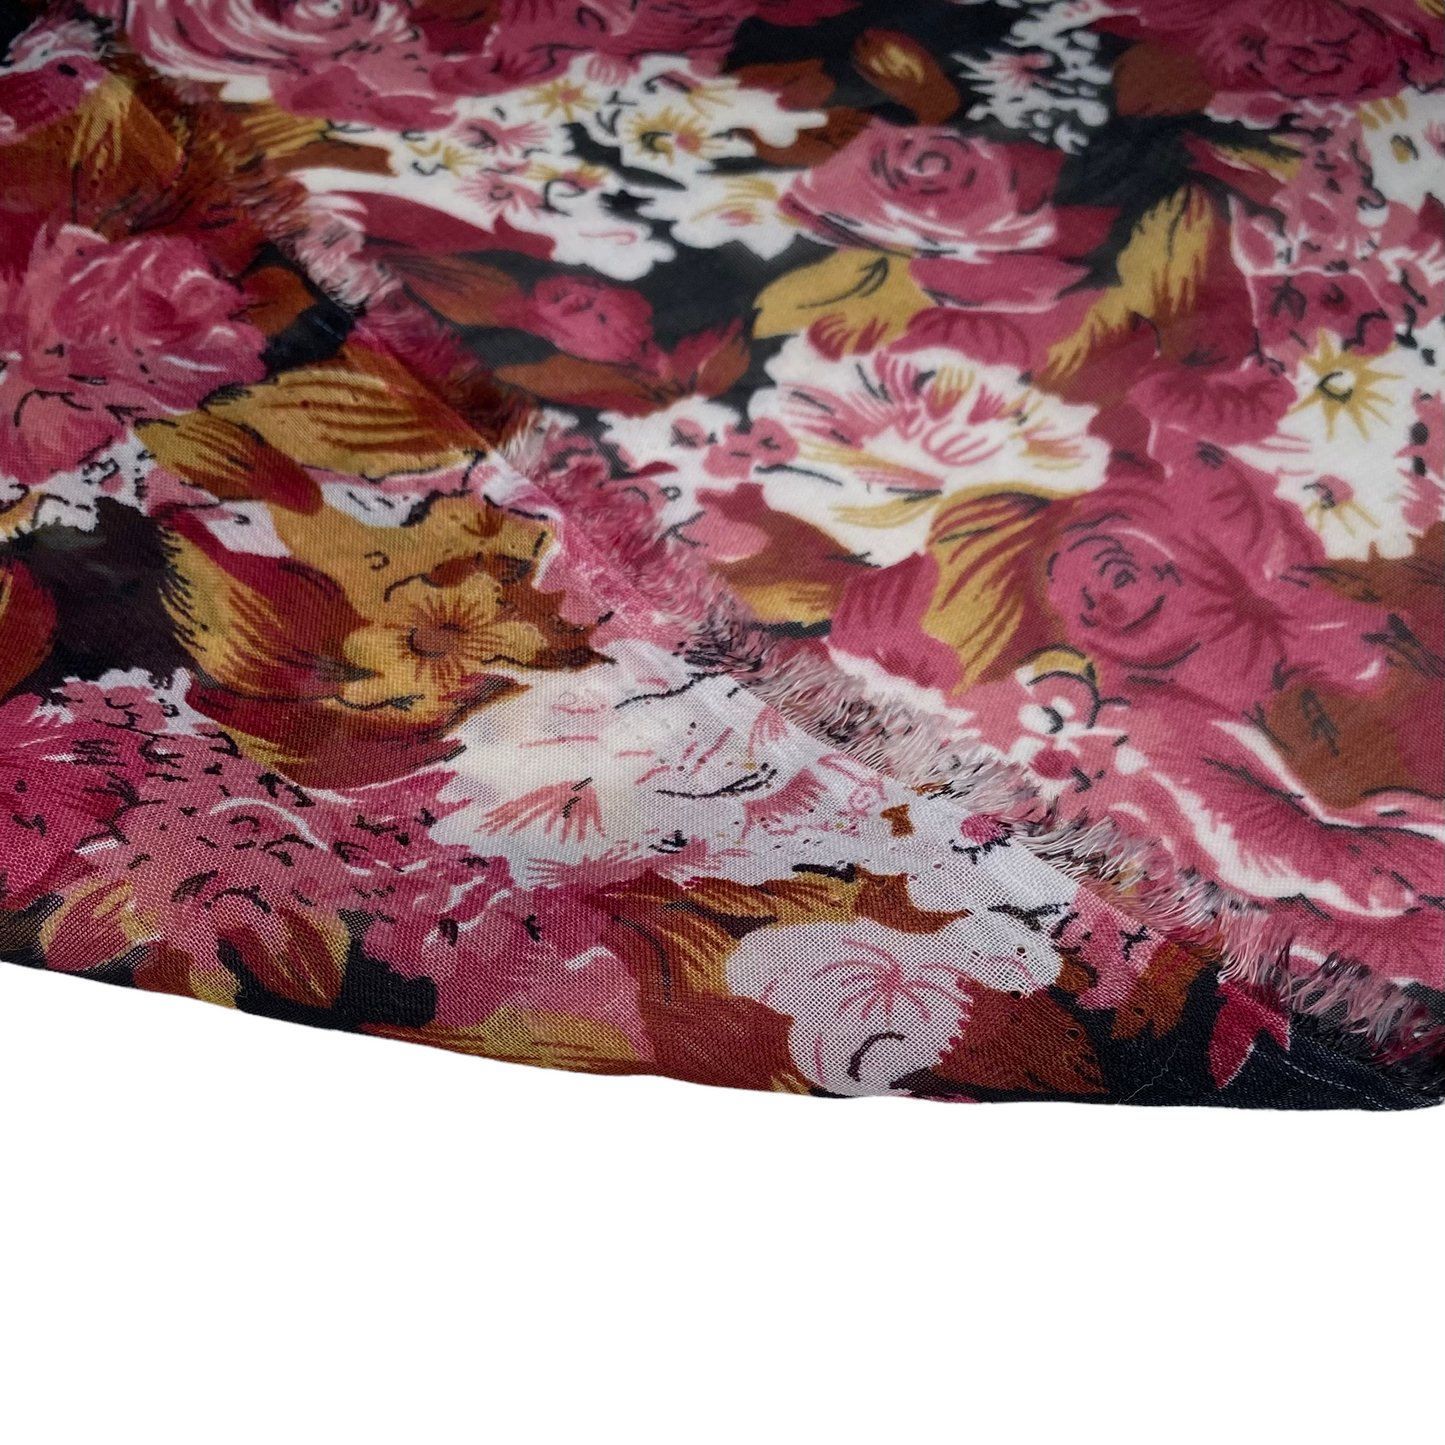 Floral Polyester Chiffon - 56”